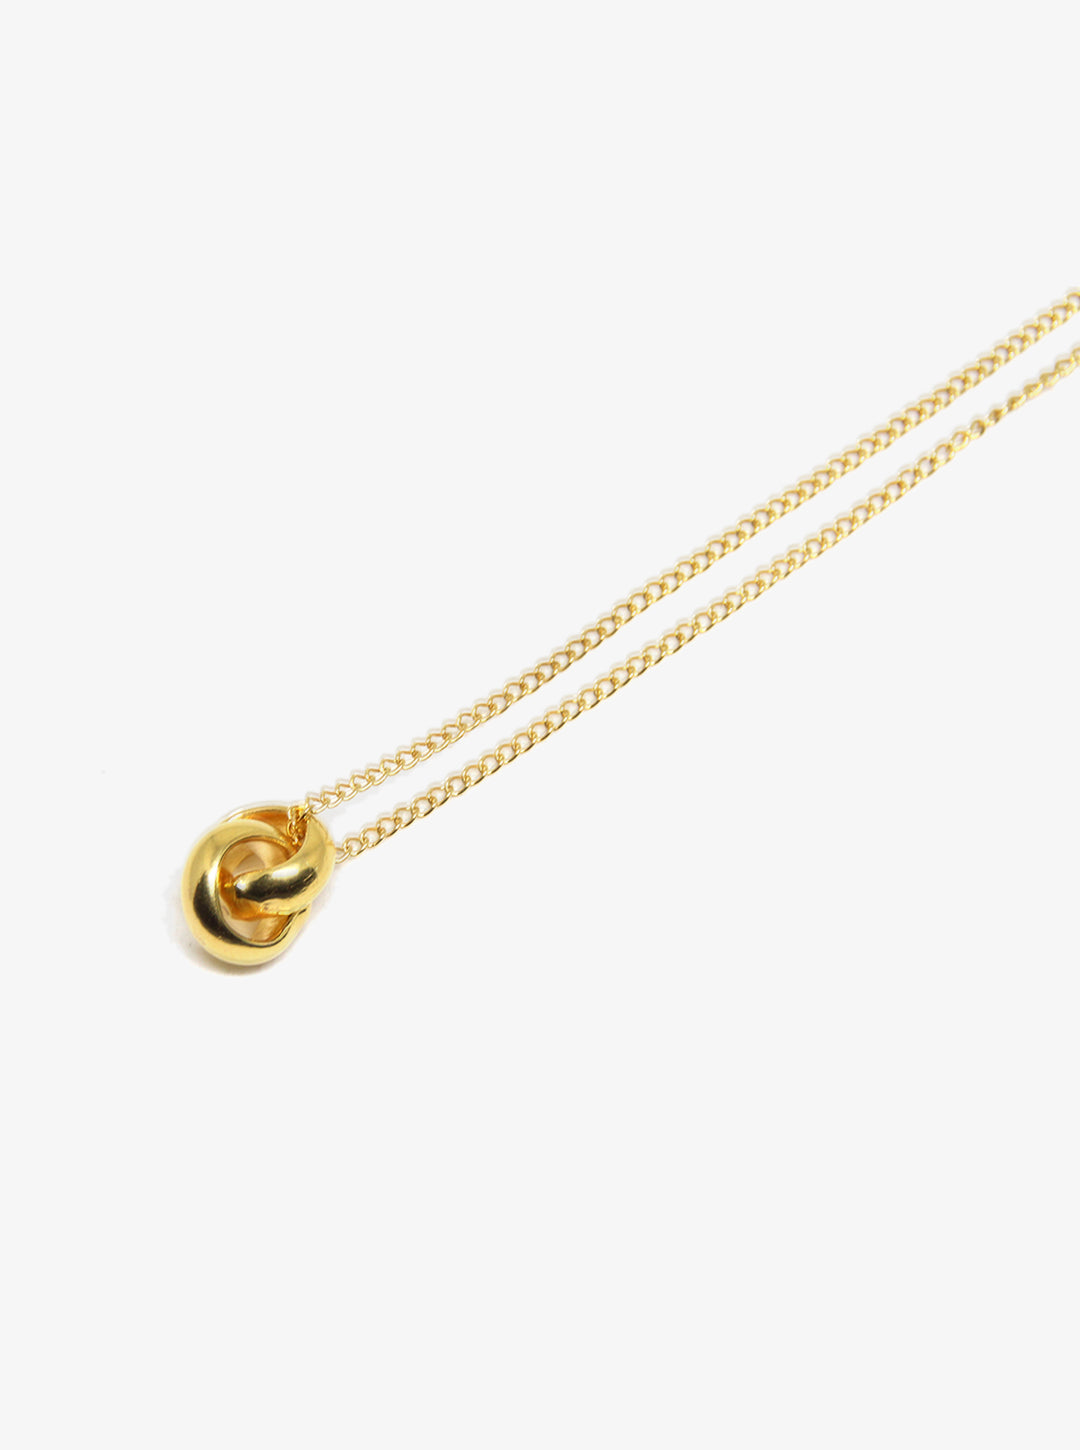 llayers-mens-women-jewelry-gold-pendant-Infinity-newyork-brooklyn-F3